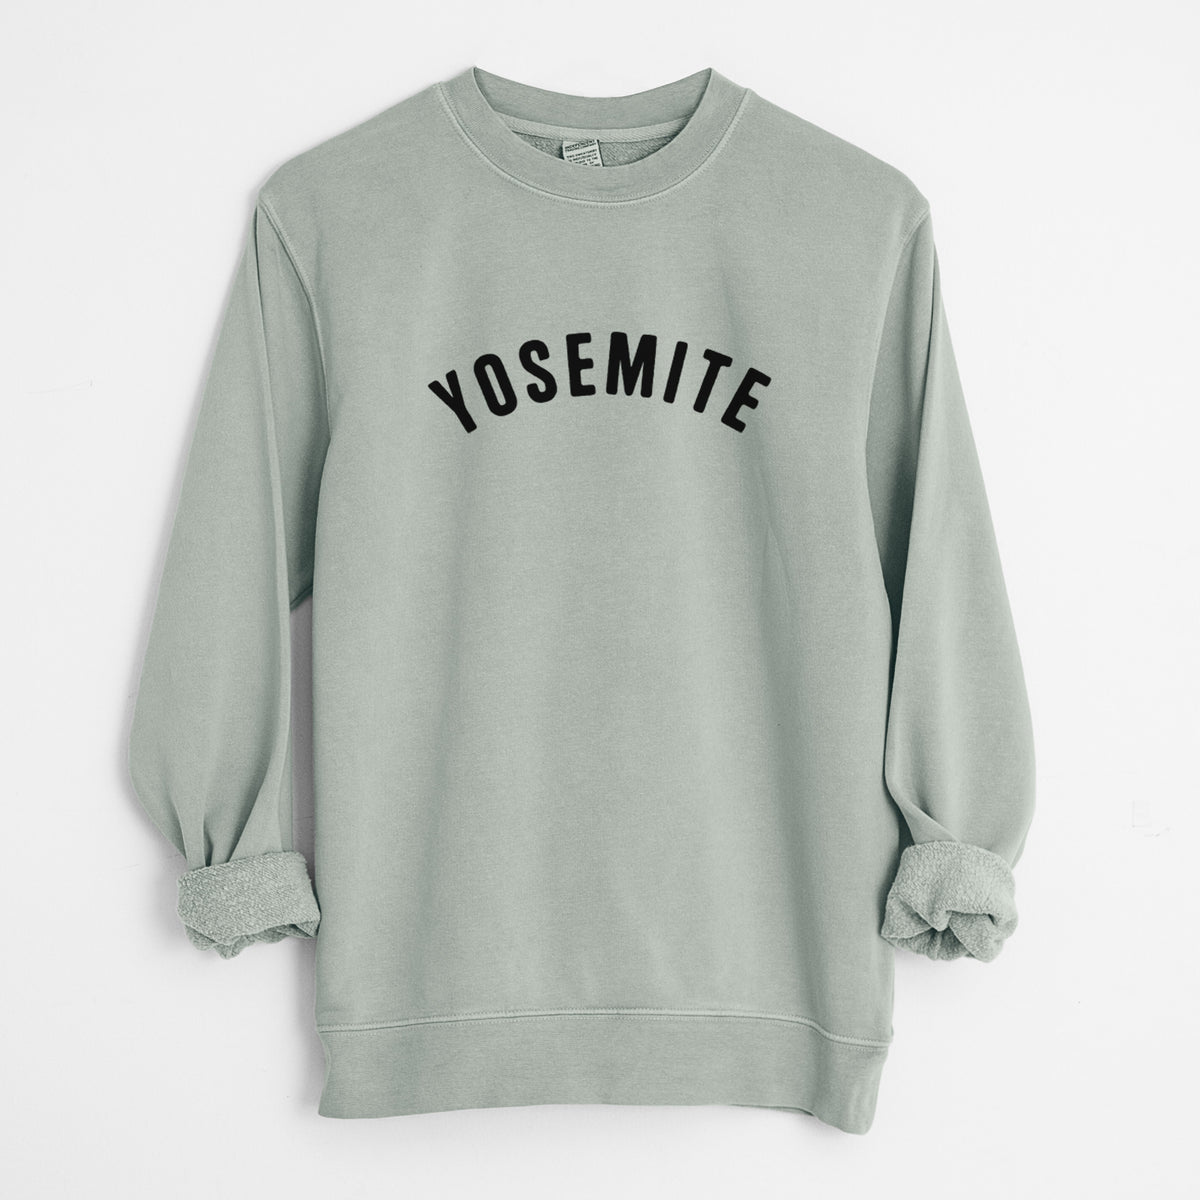 Yosemite - Unisex Pigment Dyed Crew Sweatshirt